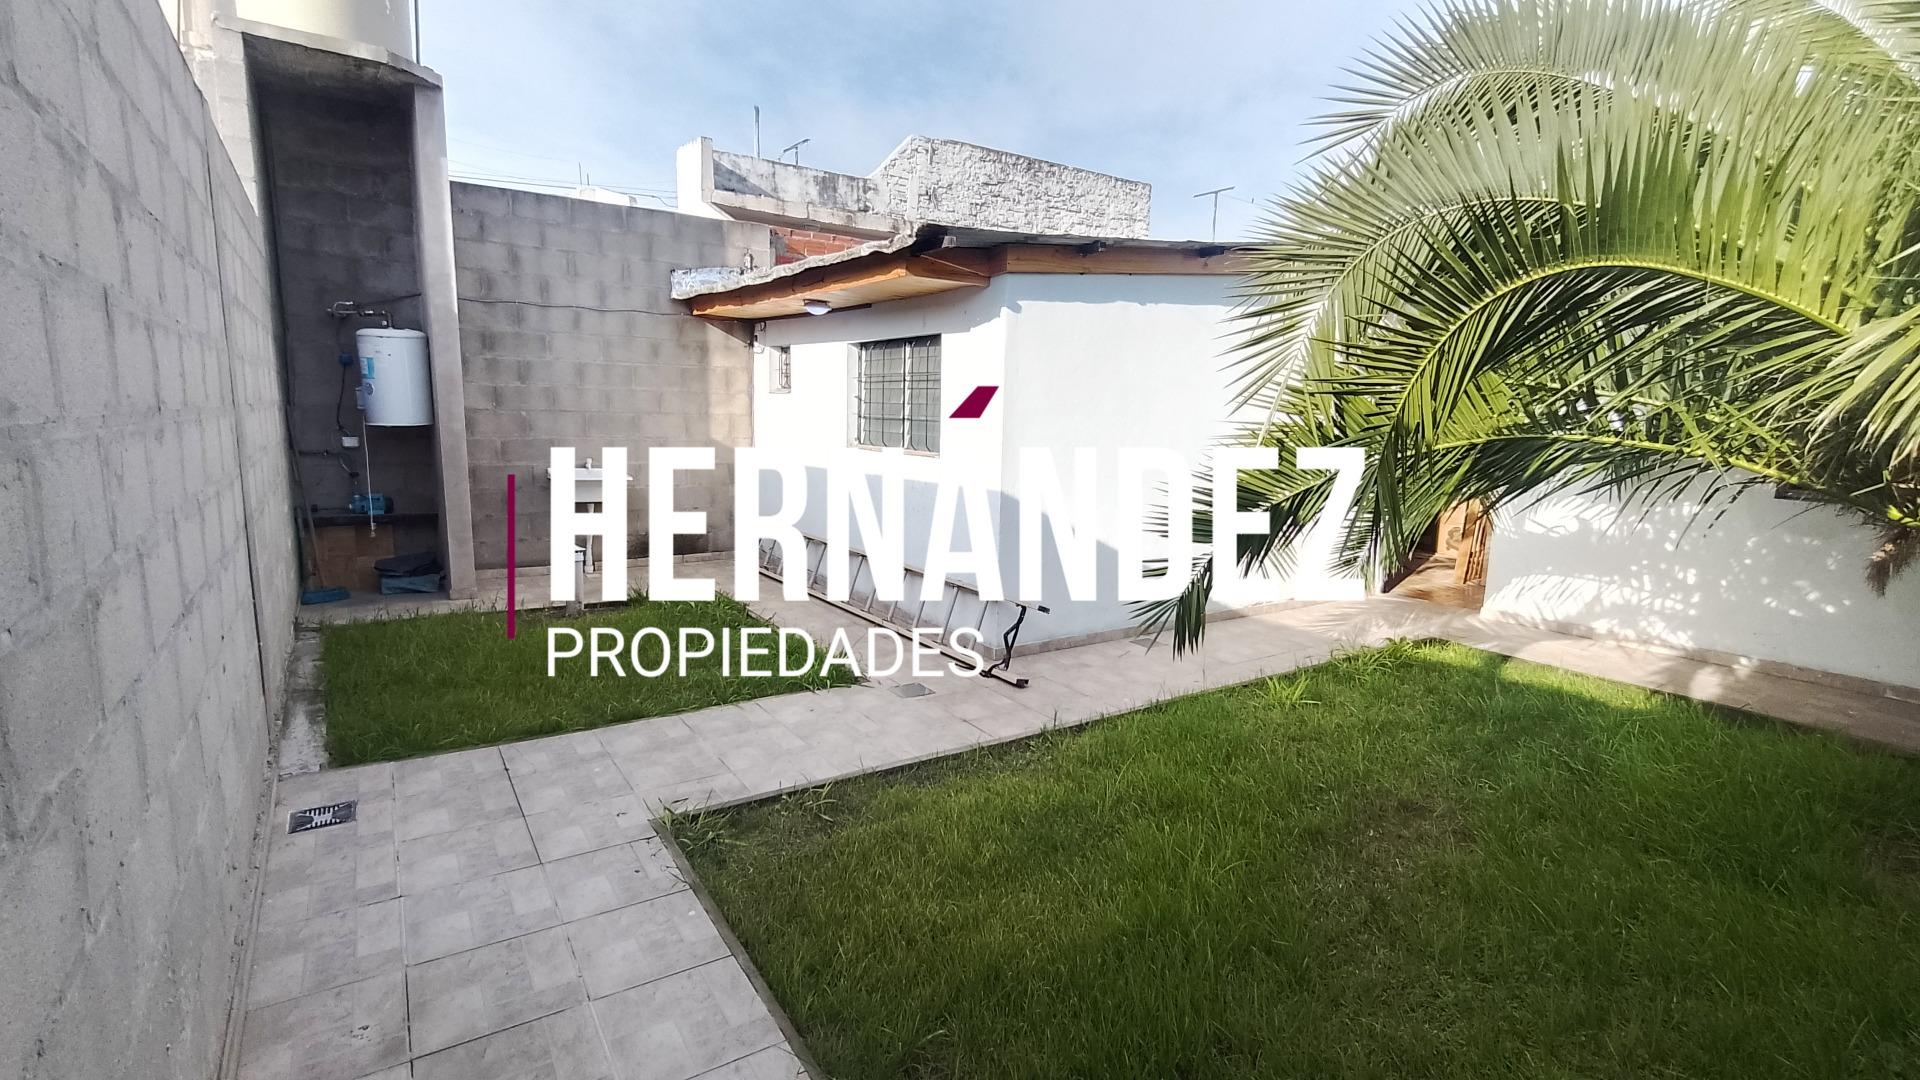 #5166727 | Sale | Horizontal Property | Lomas De Zamora (Hernandez propiedades)